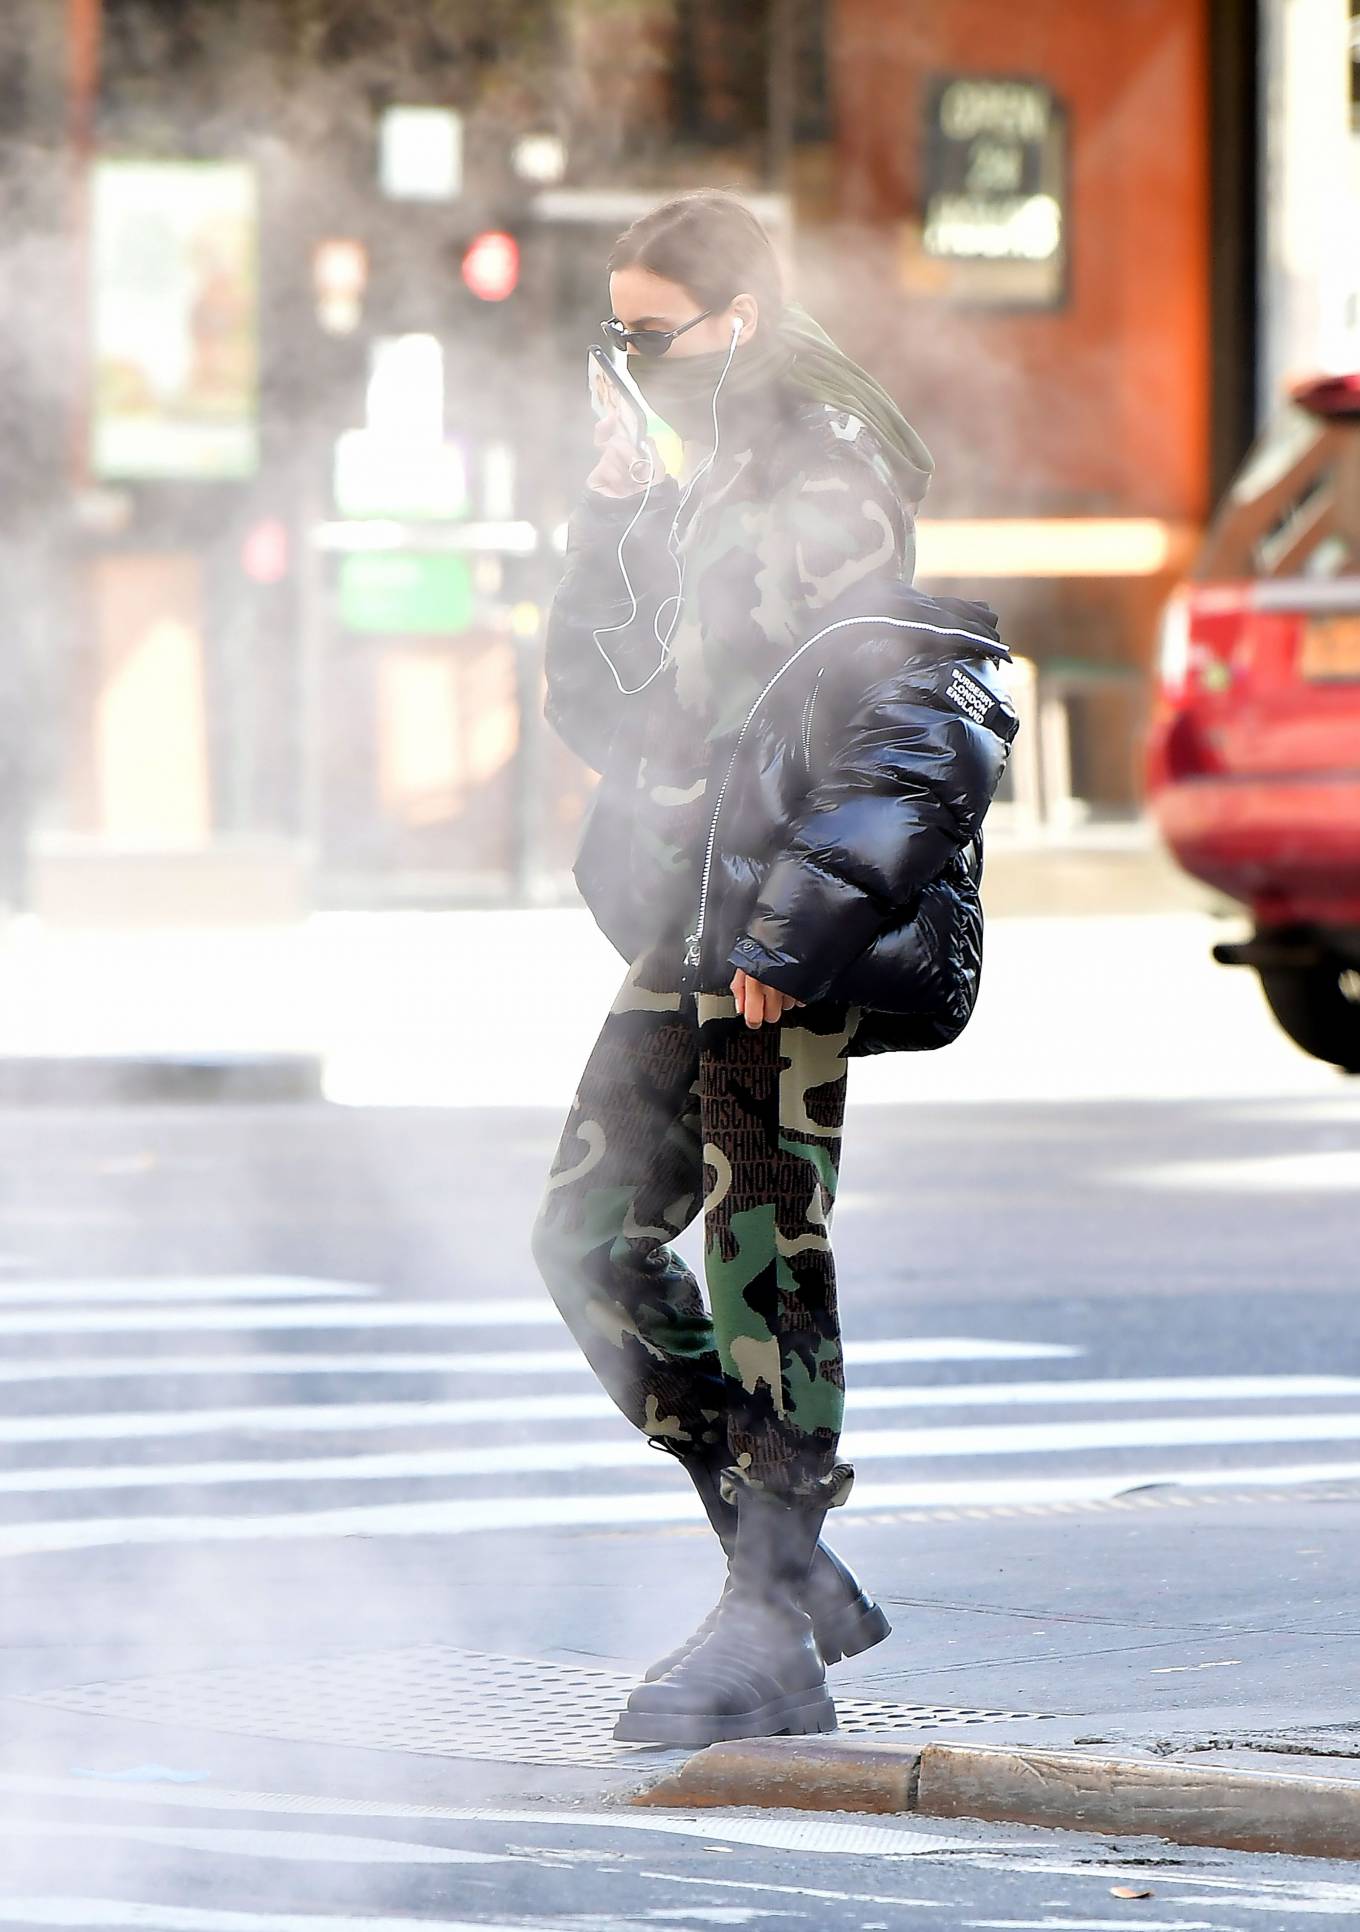 Irina Shayk â€“ In Military Look during lockdown in New York City